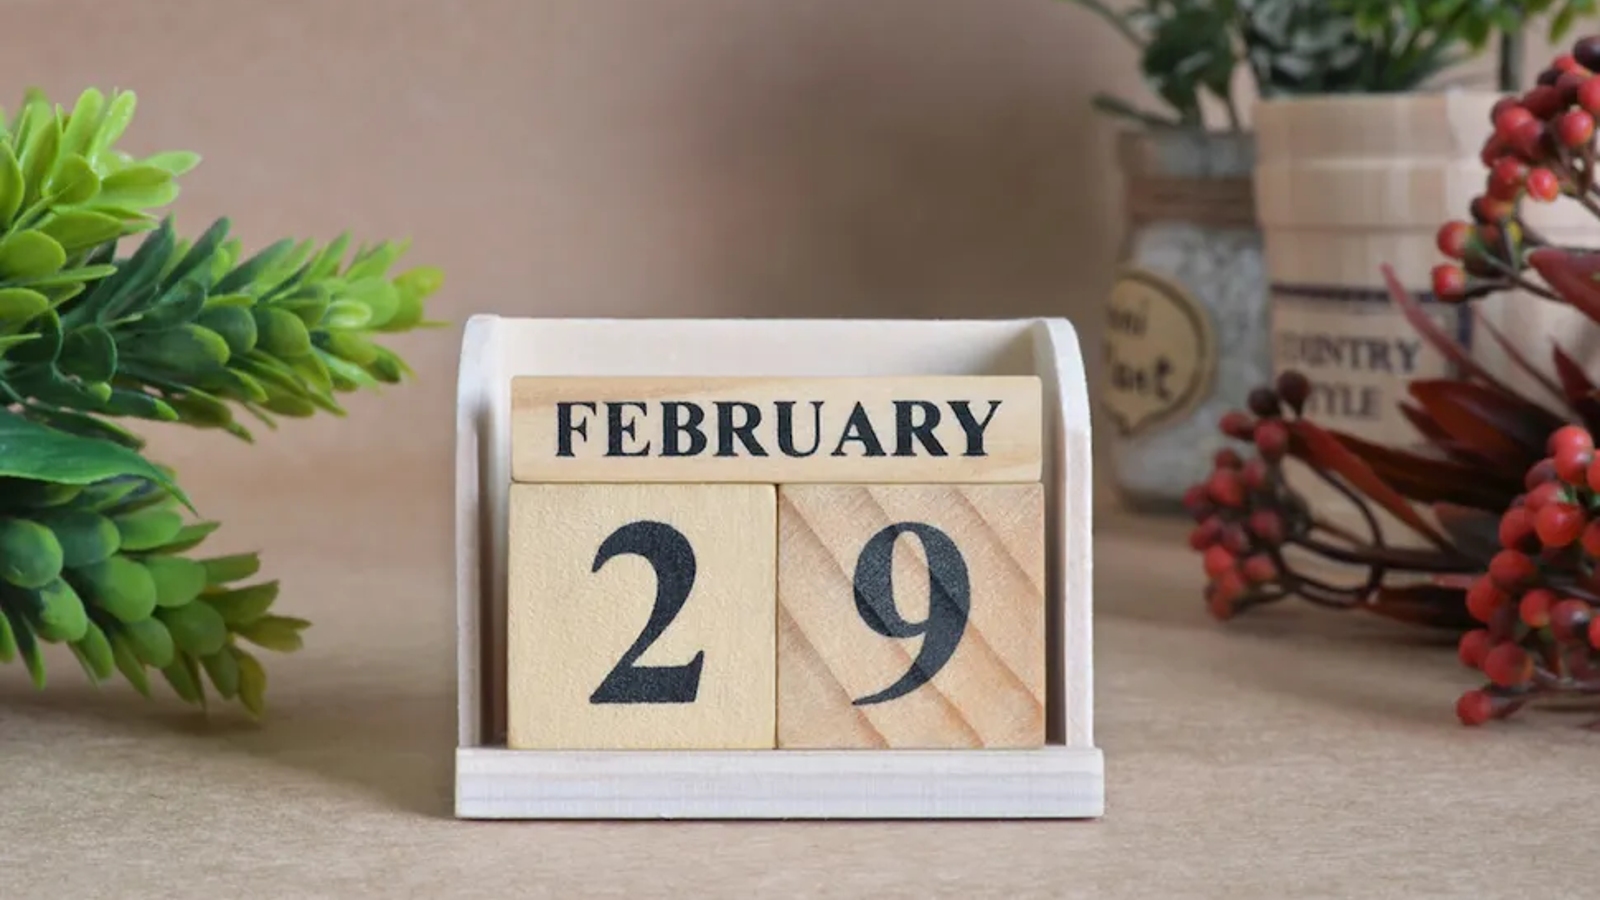 A calendar showing the date February 29